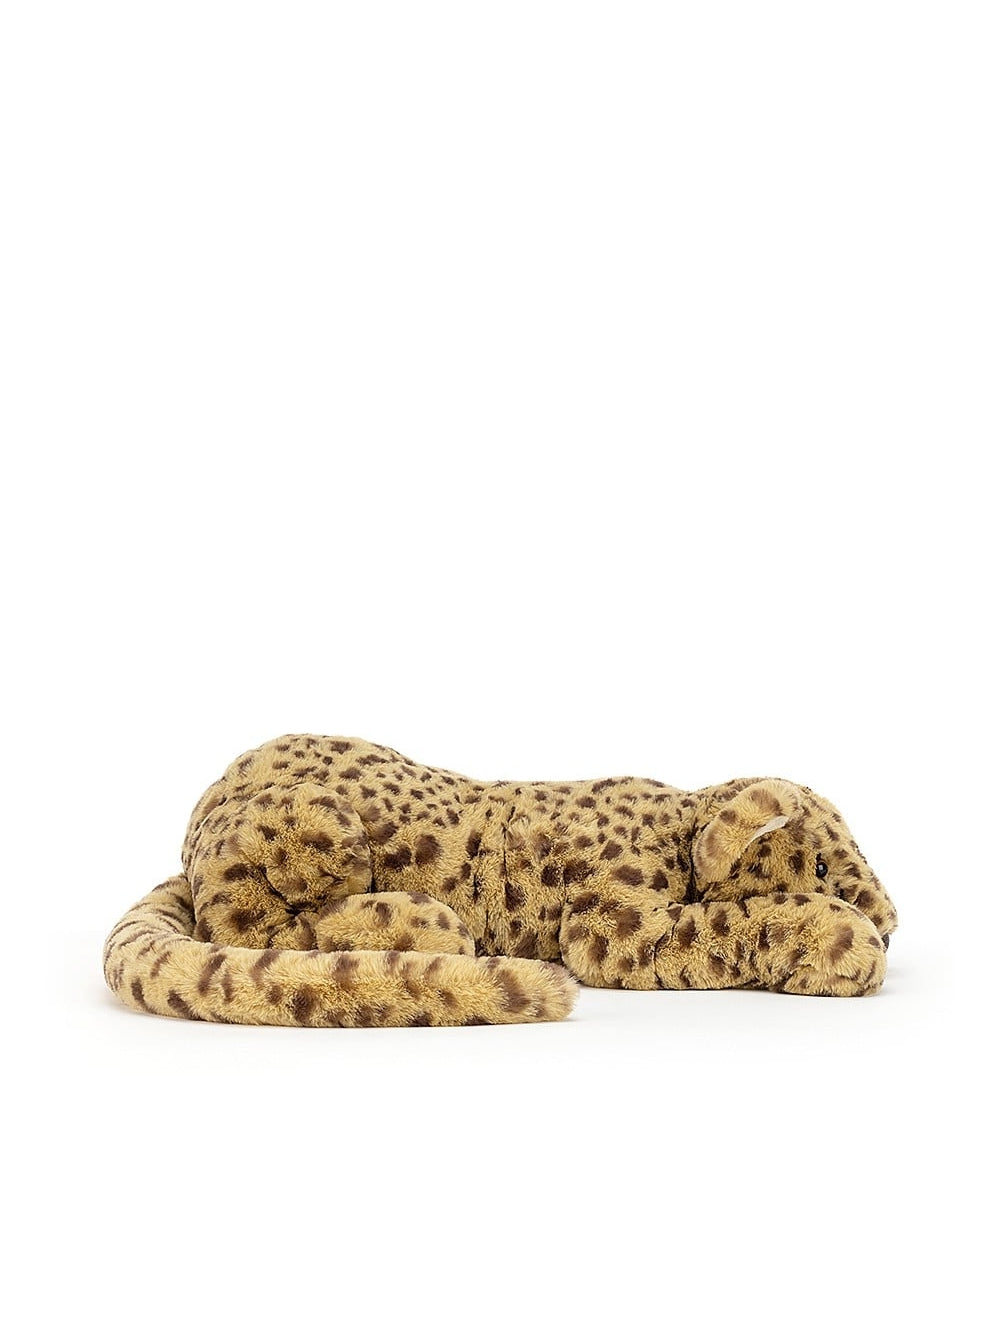 Charley Cheetah, large